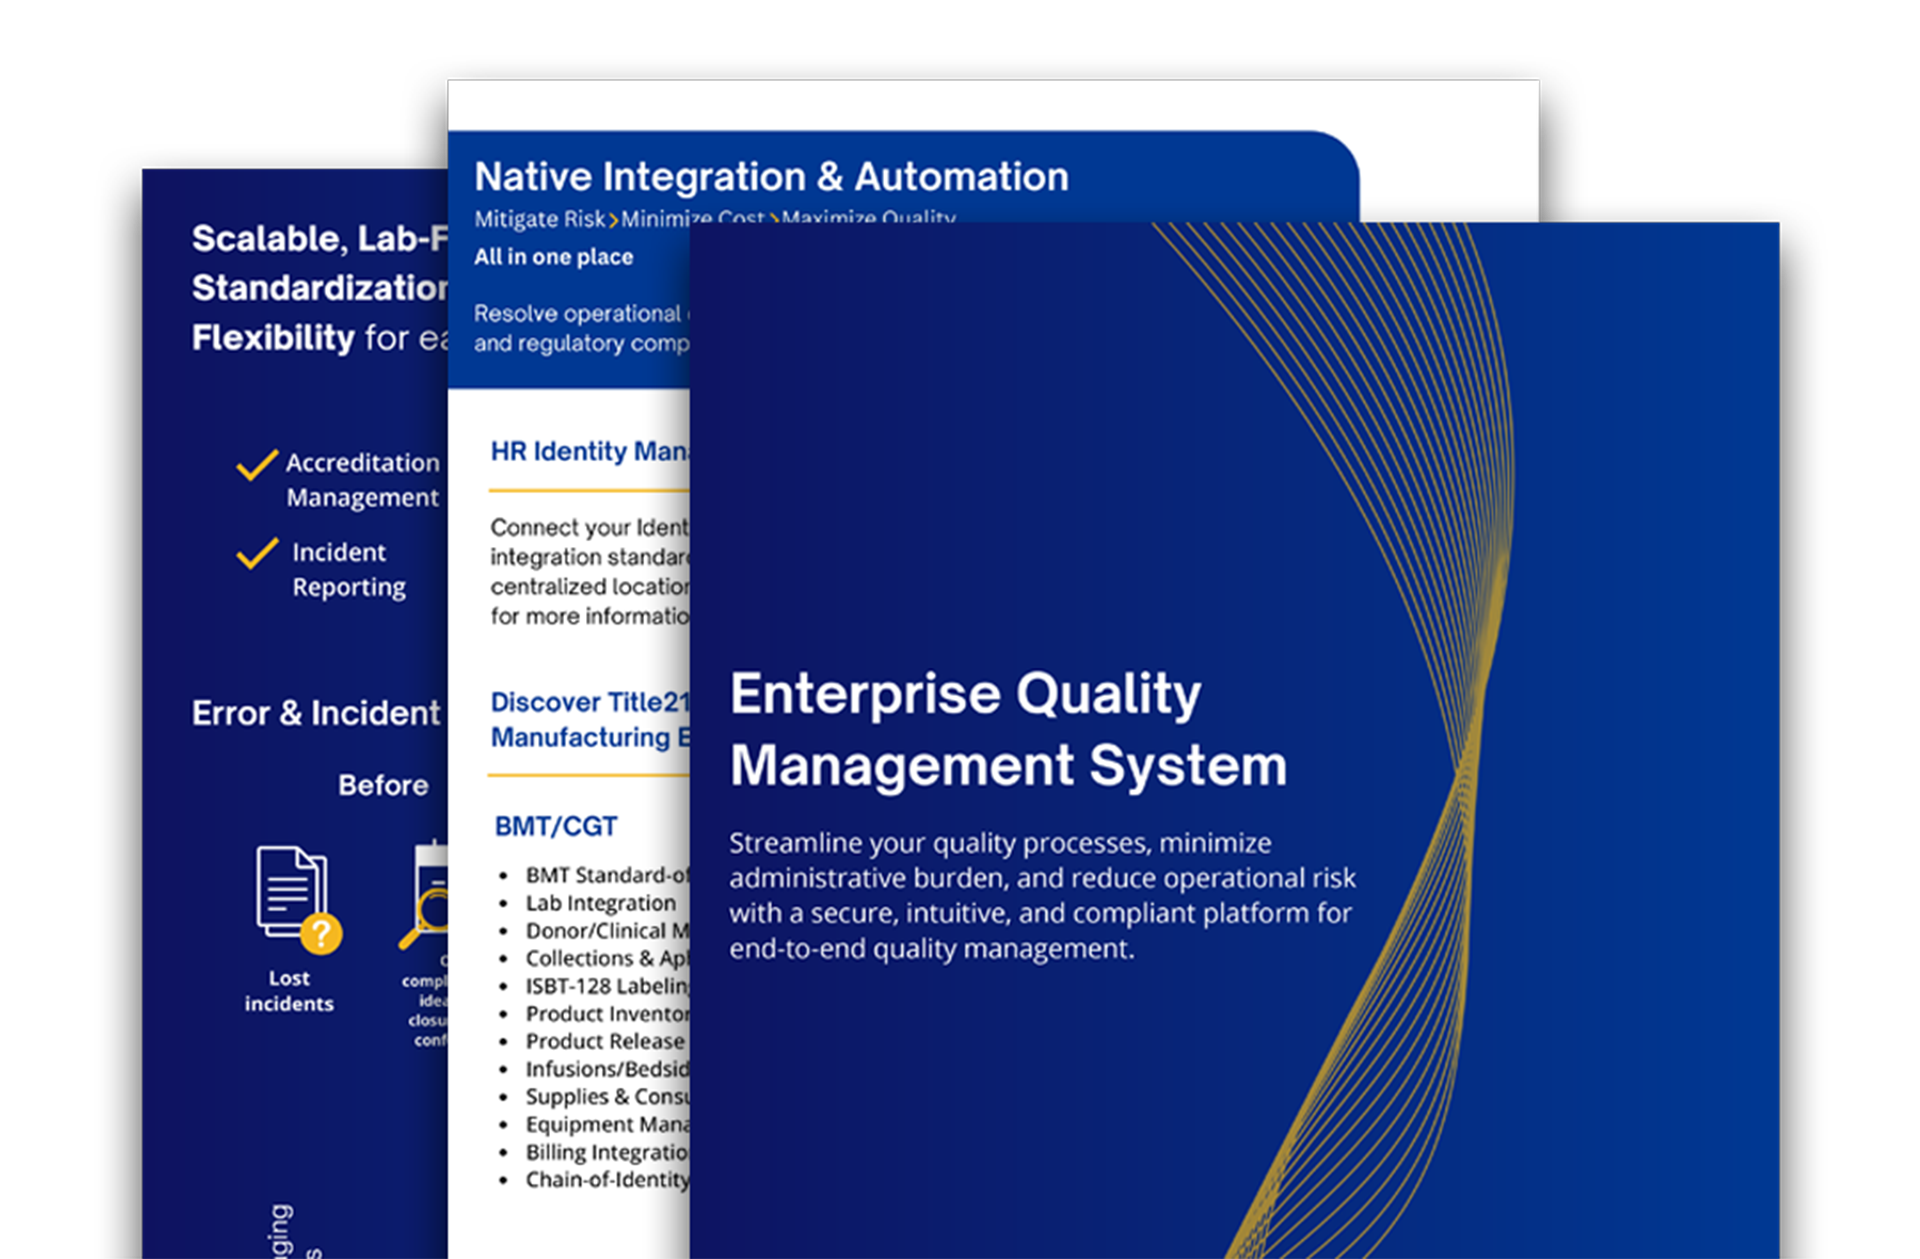 Enterprise Quality Management System